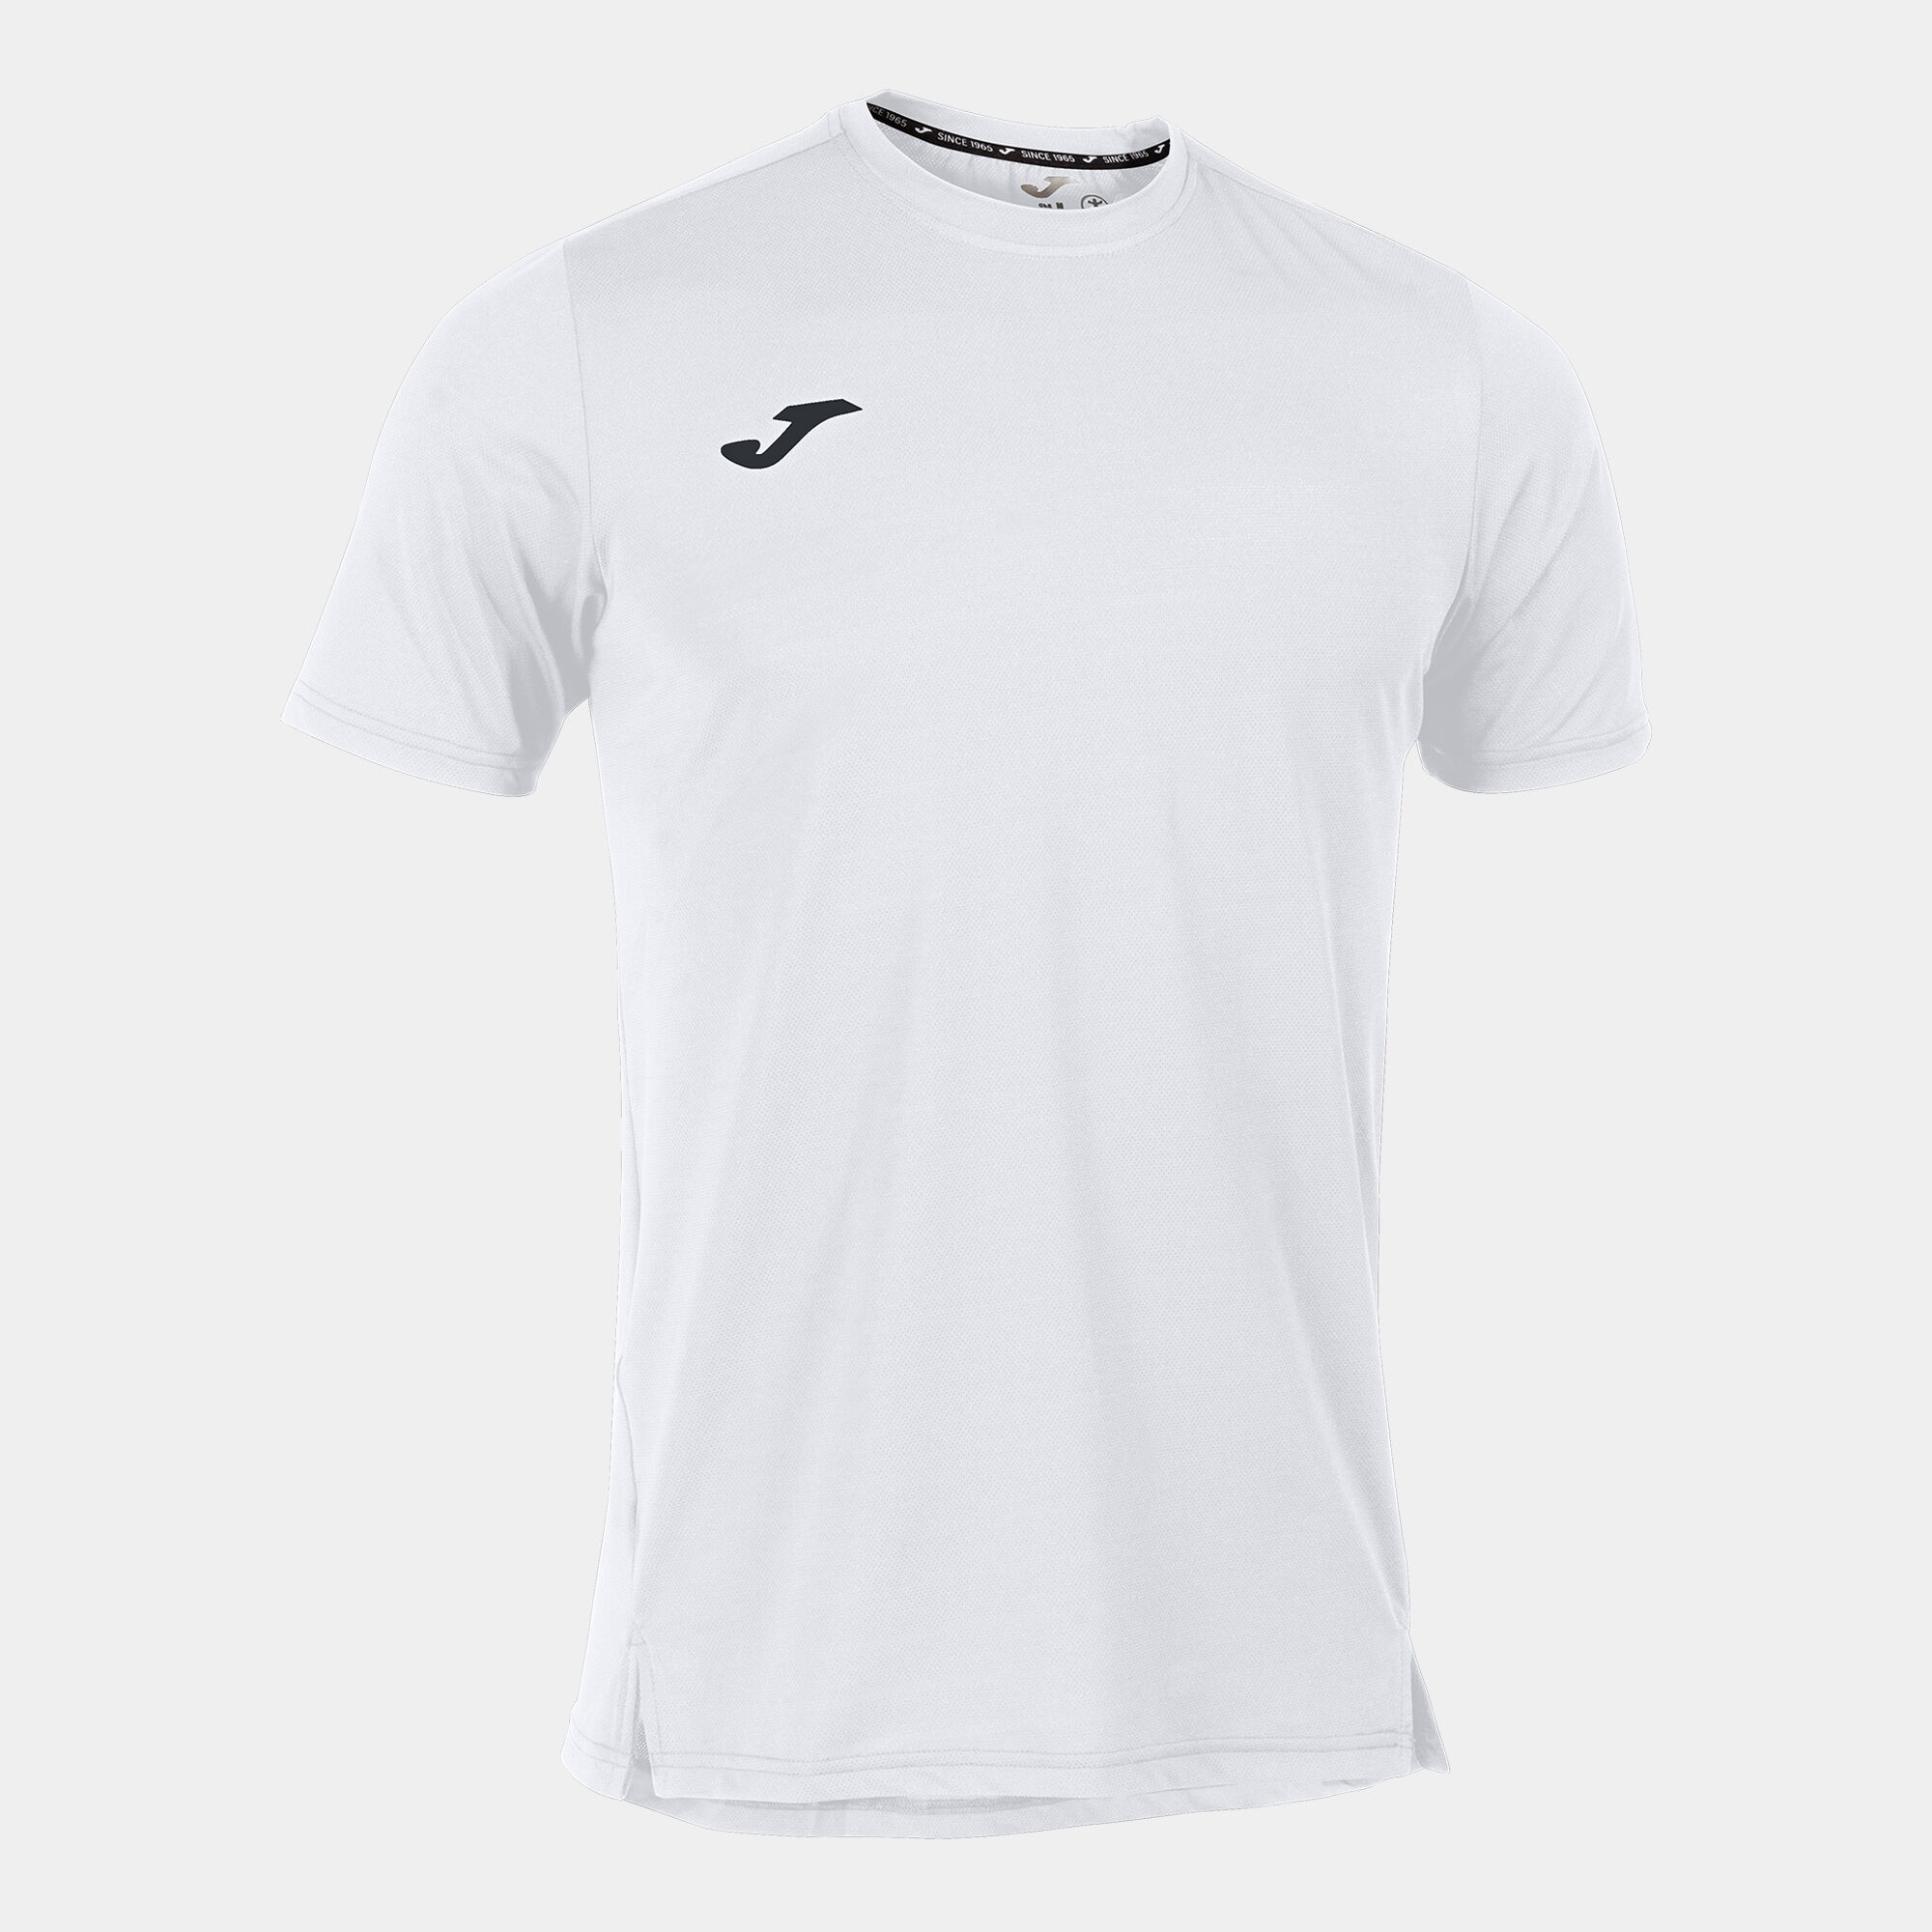 Shirt short sleeve man Torneo white